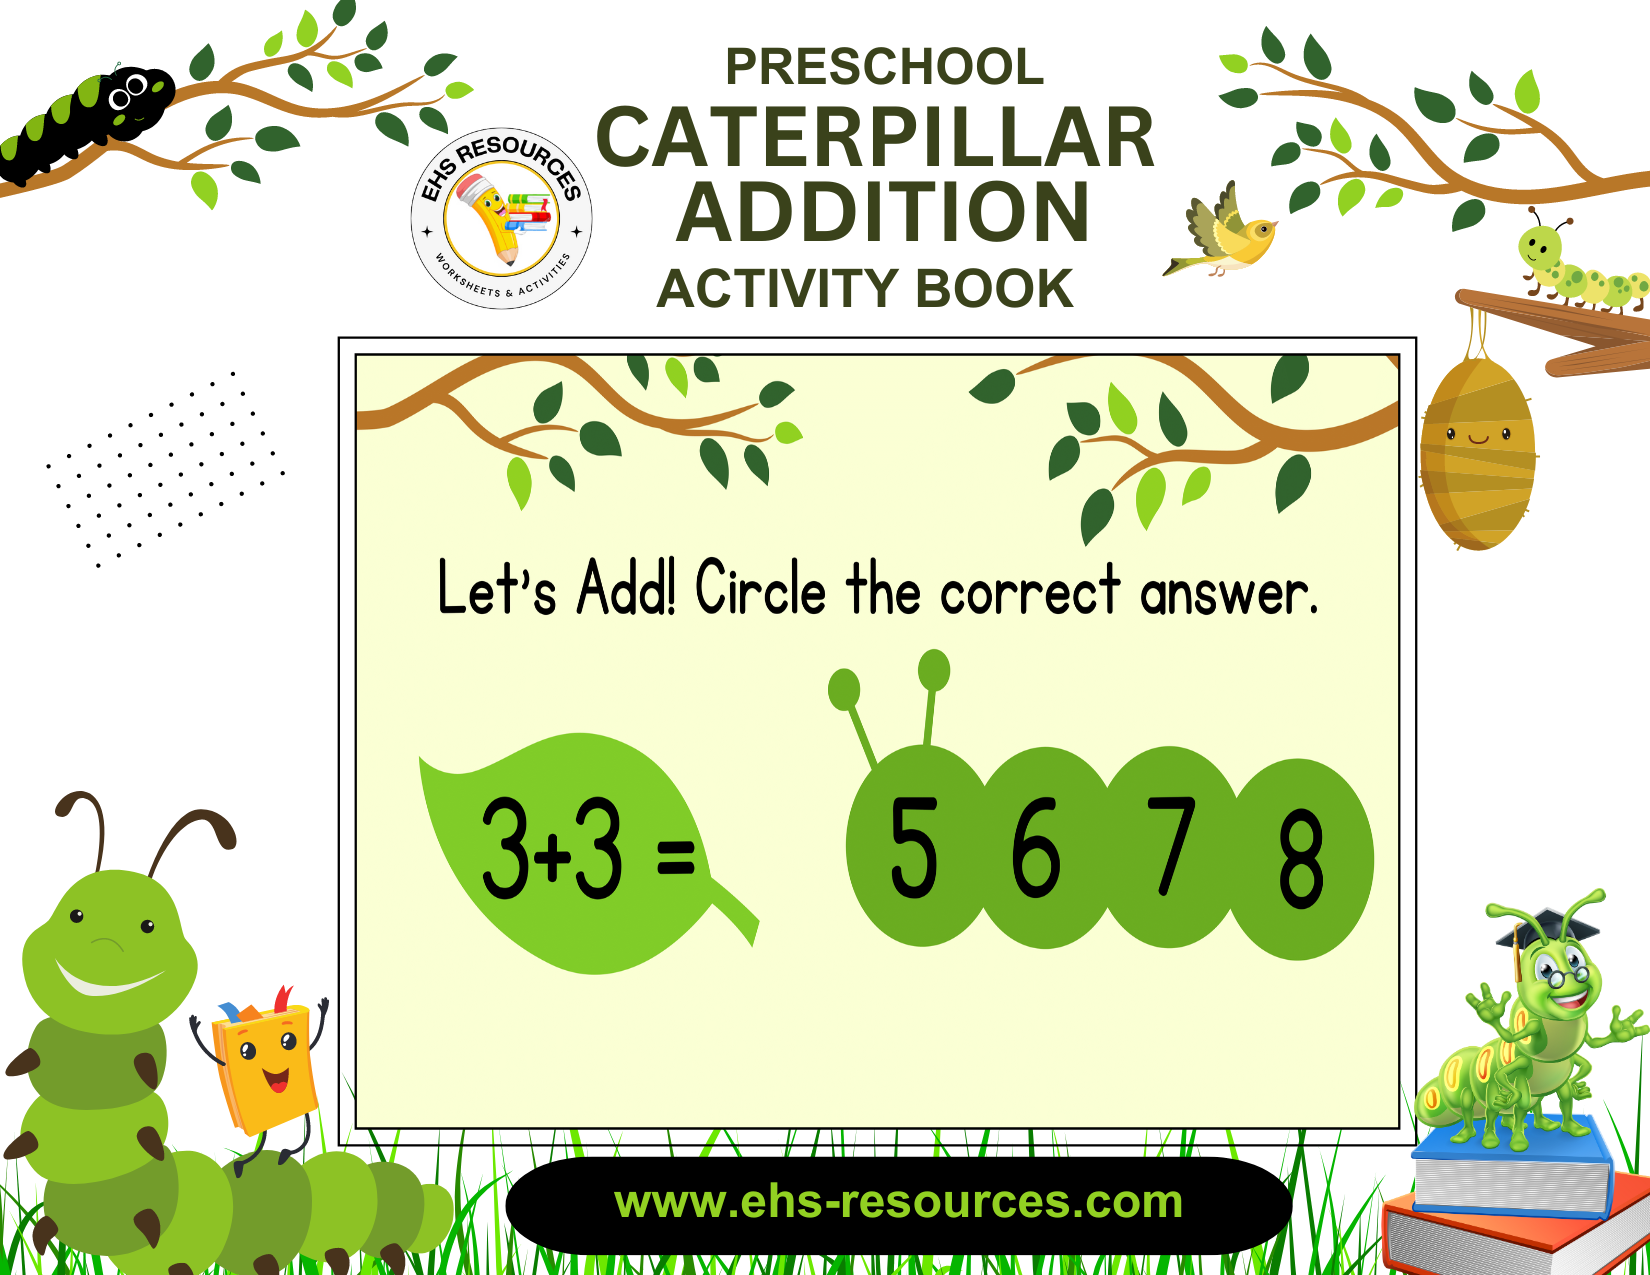 Caterpillar Addition Book For Preschool- Worksheet Page 1